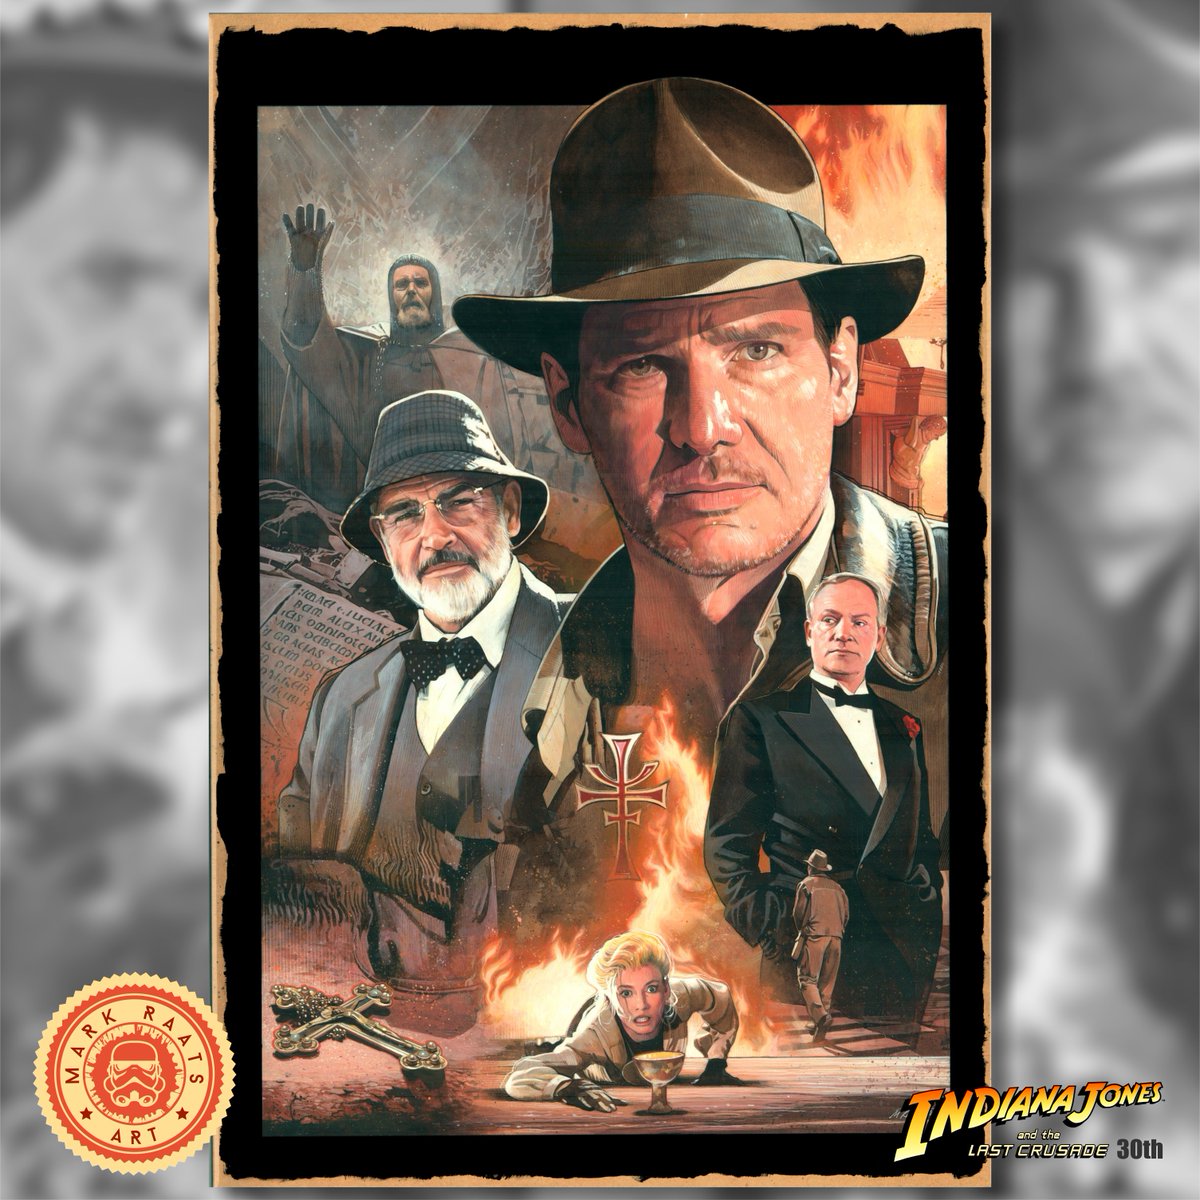 Indiana Jones and the Last Crusade - concepts and final painted art.

#indianajones #georgelucas #stevenspielberg #lucasfilm #disney #harrisonford #seanconnery #johnrhysdavies #alisondoody #julianglover